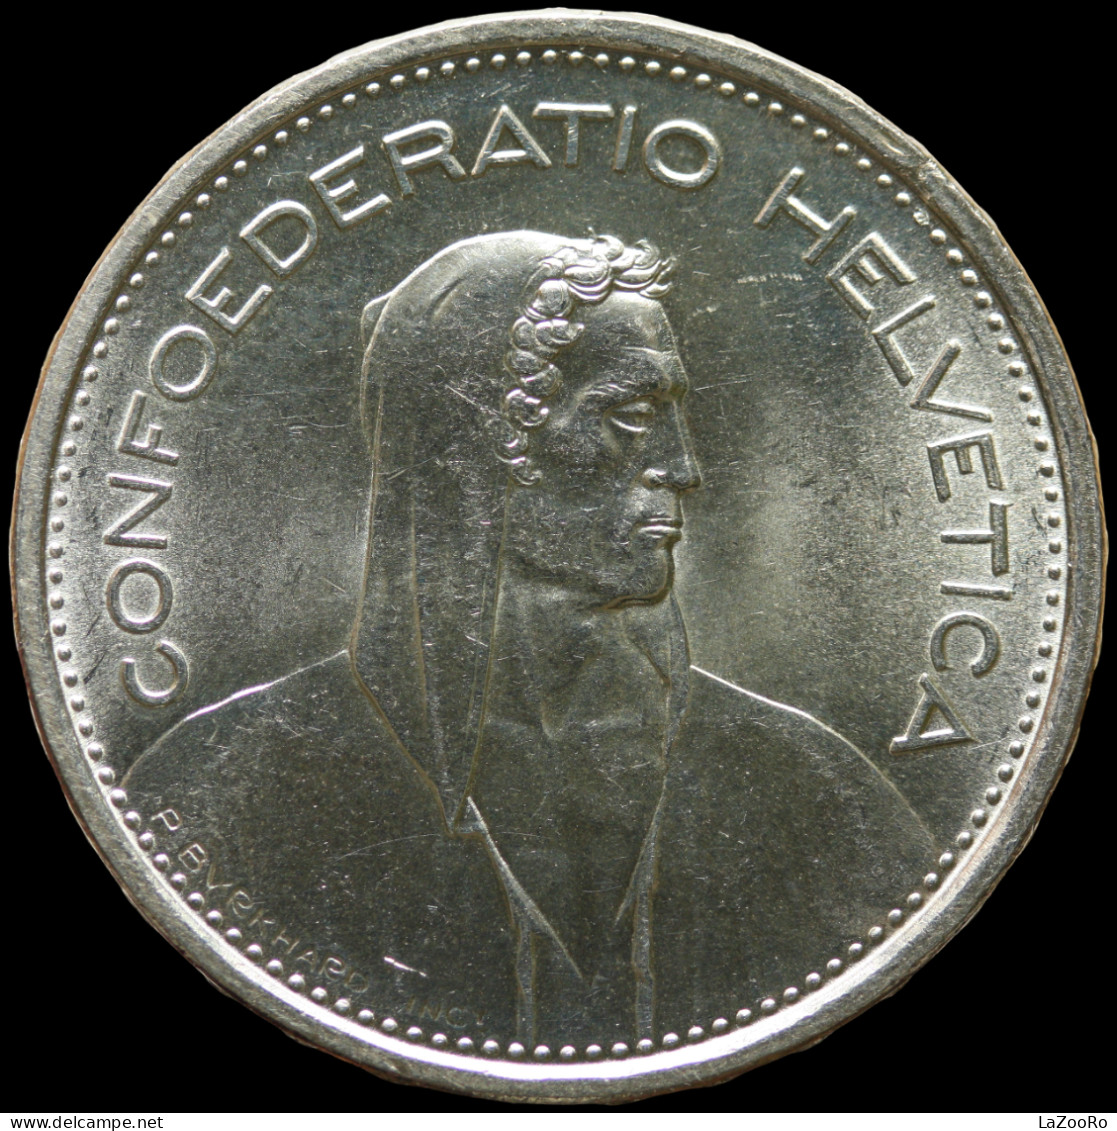 LaZooRo: Switzerland 5 Francs 1966 UNC - Silver - 5 Franken